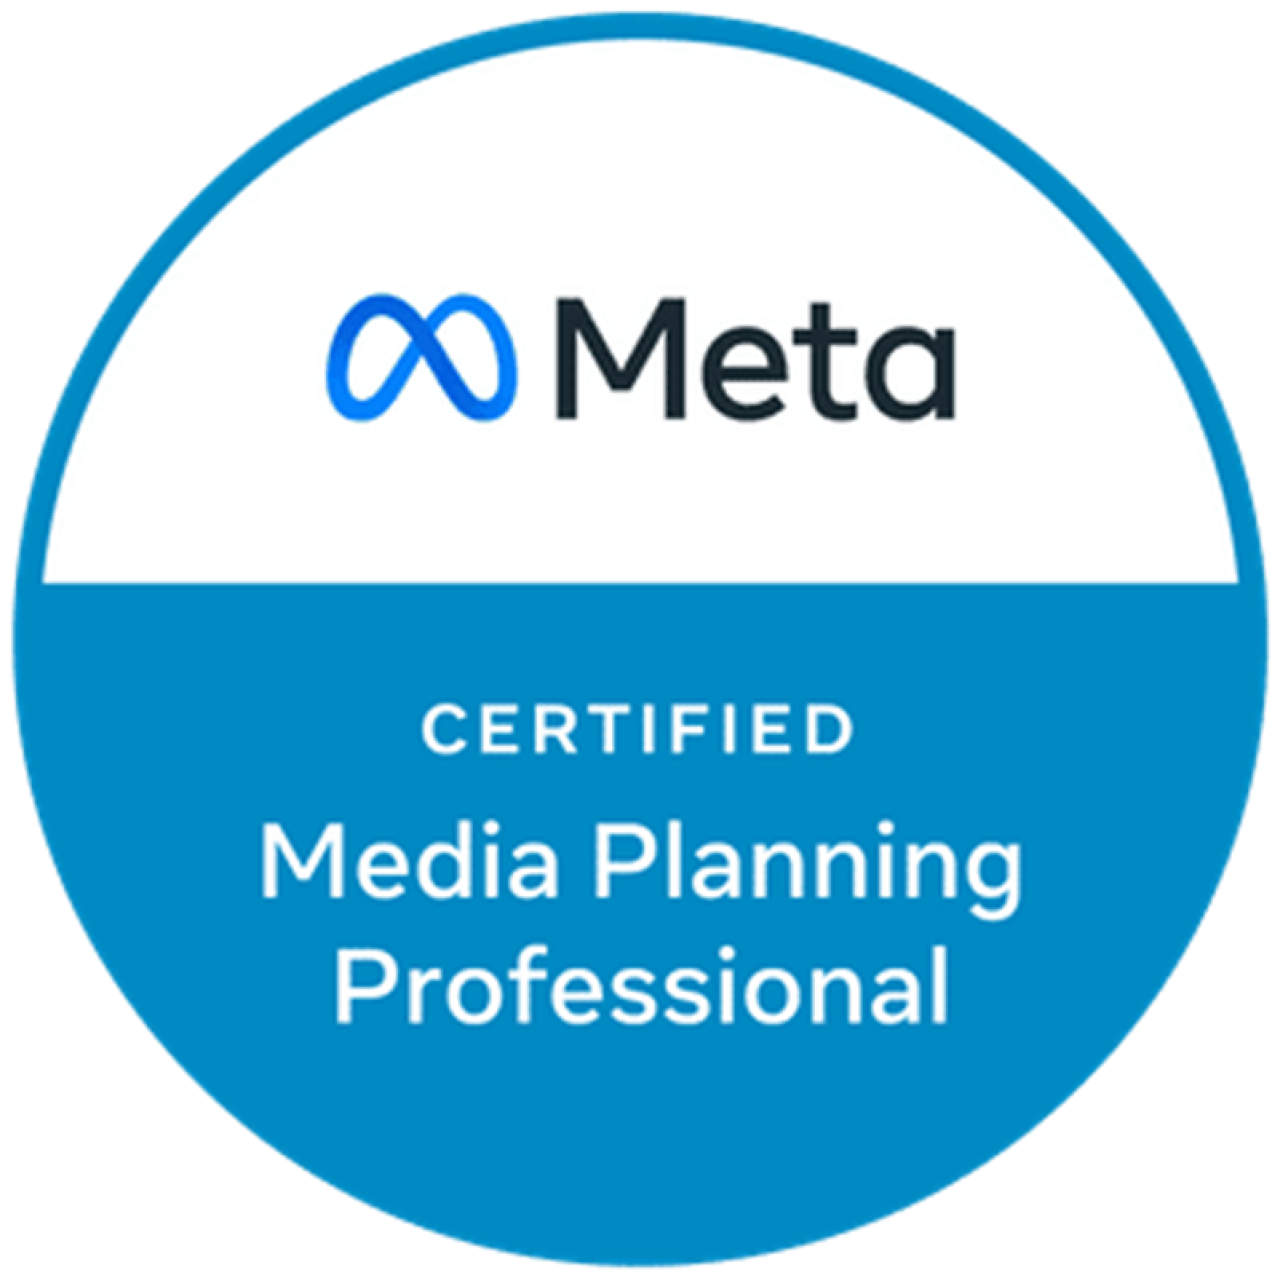 Meta certified Media Planning Professional.